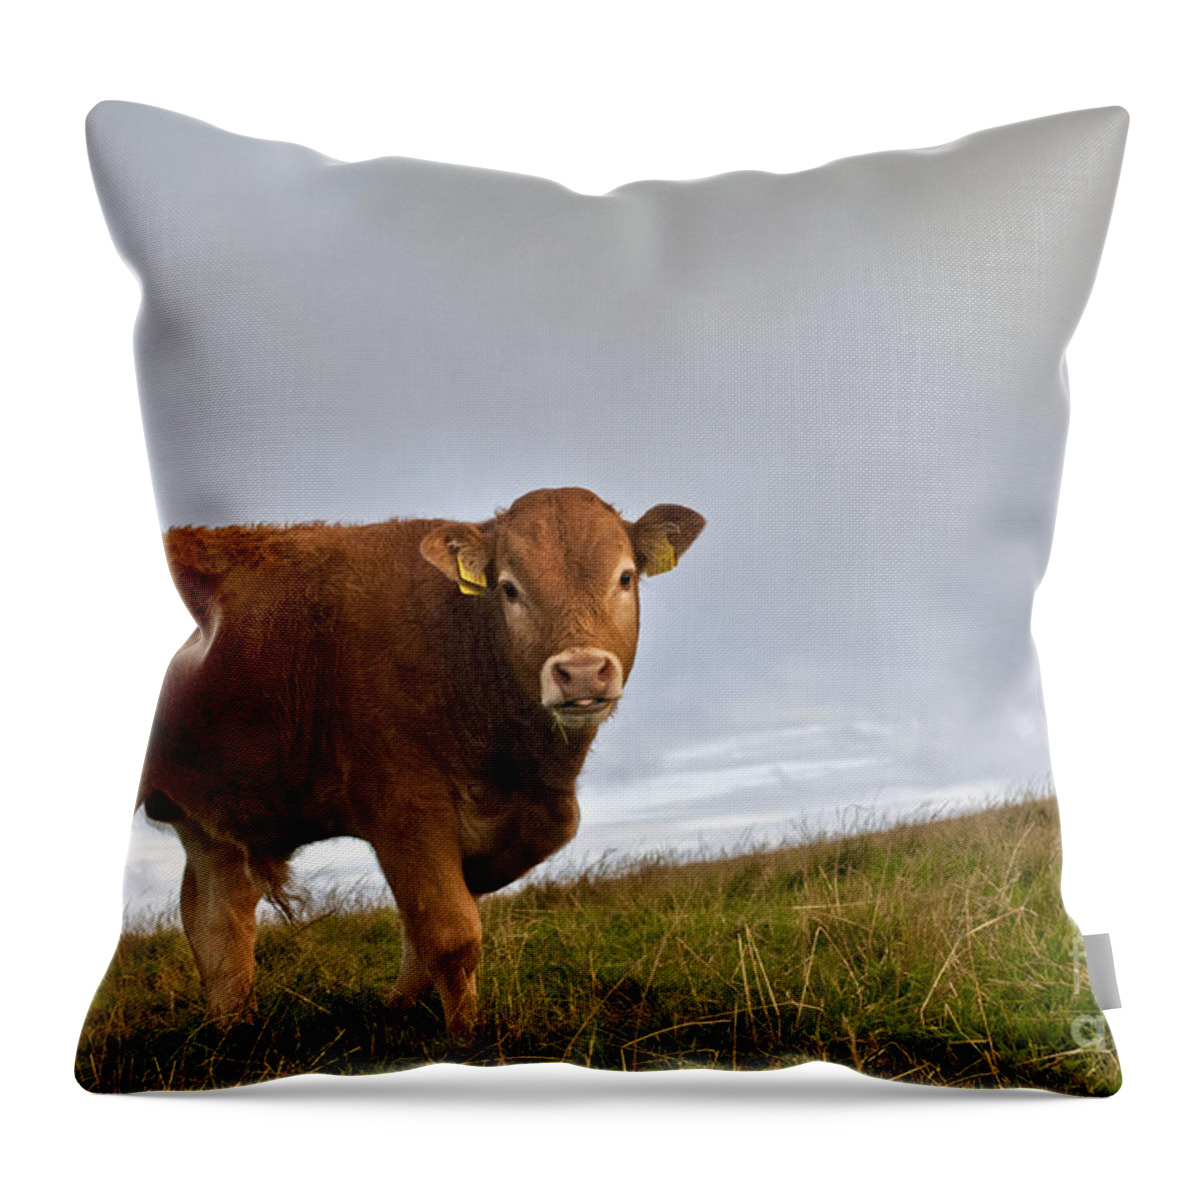 Ireland Digital Photographs Throw Pillow featuring the digital art Cliffs of Moher Brown Cow by Danielle Summa